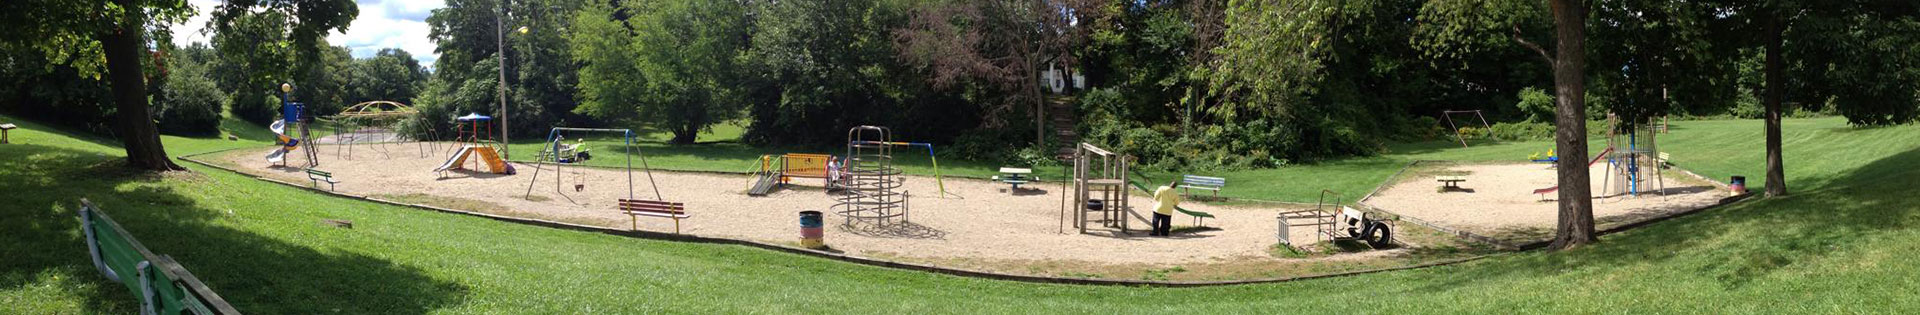 Neighborhood Park and Playground